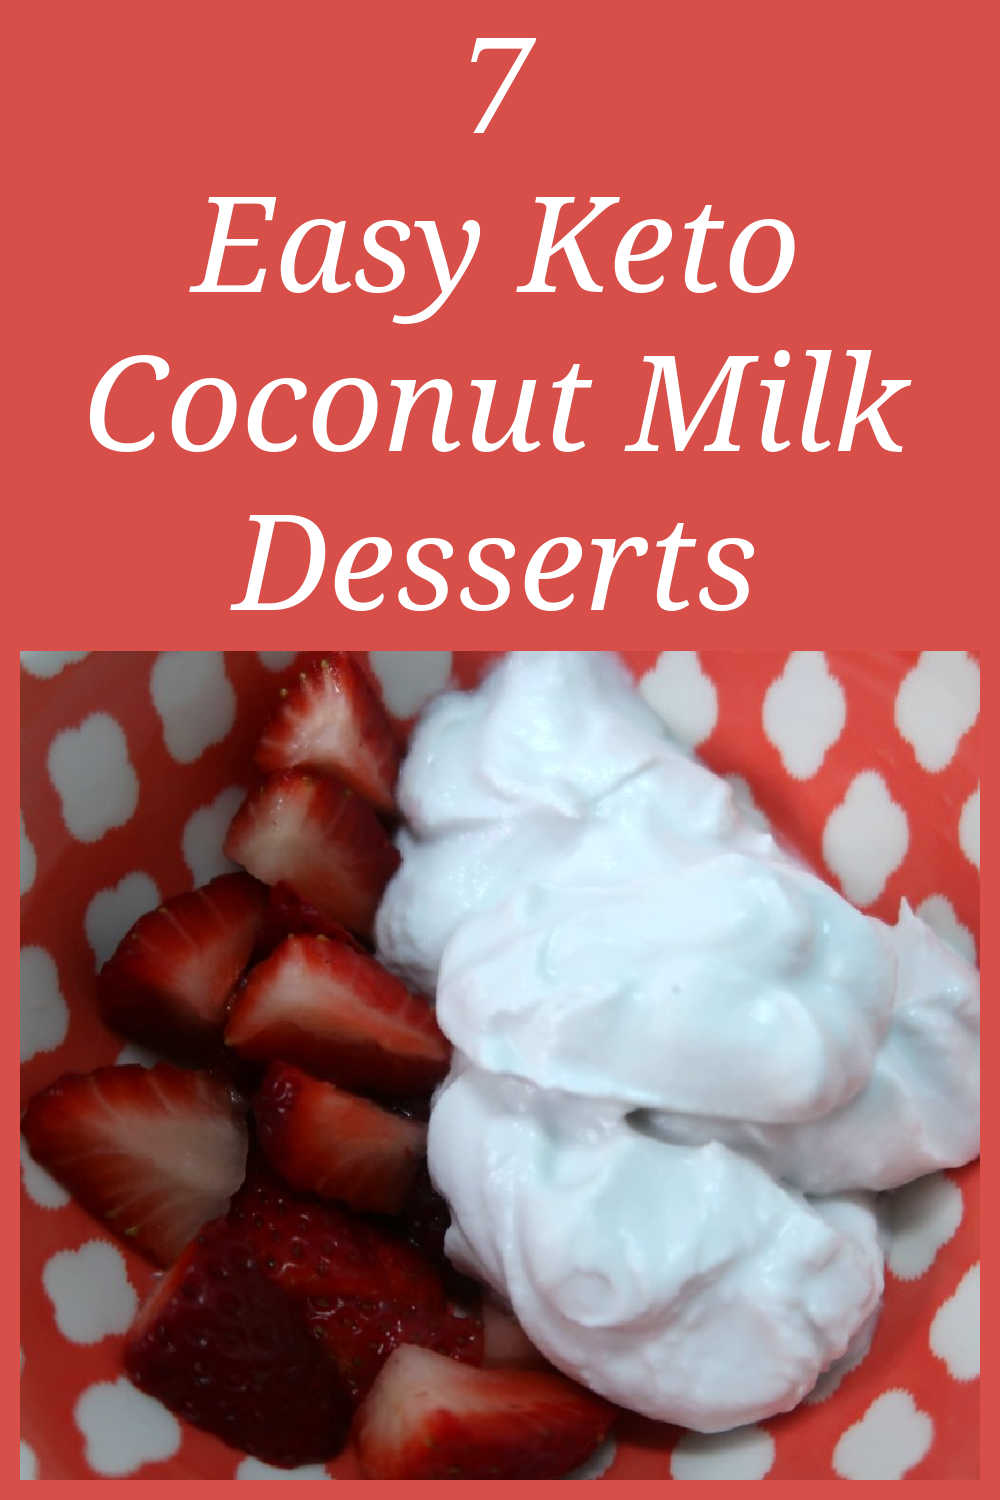 7 Keto Coconut Milk Recipes - Easy low carb and sugar free dessert recipe ideas including chia pudding, smoothies, truffles and more ketogenic treats